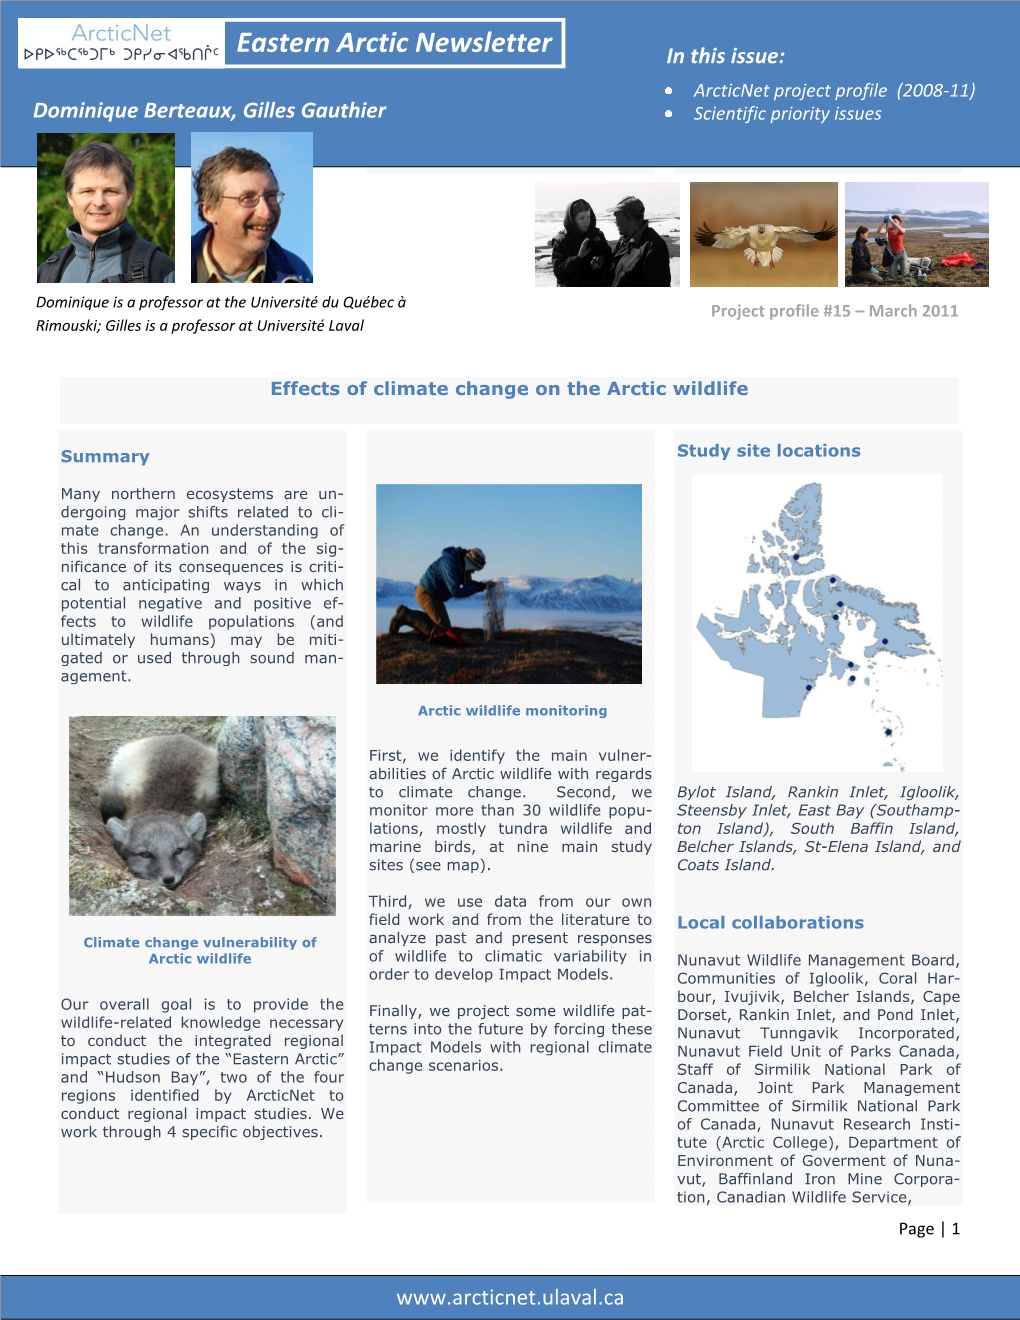 Arcticnet's Eastern Arctic Newsletter